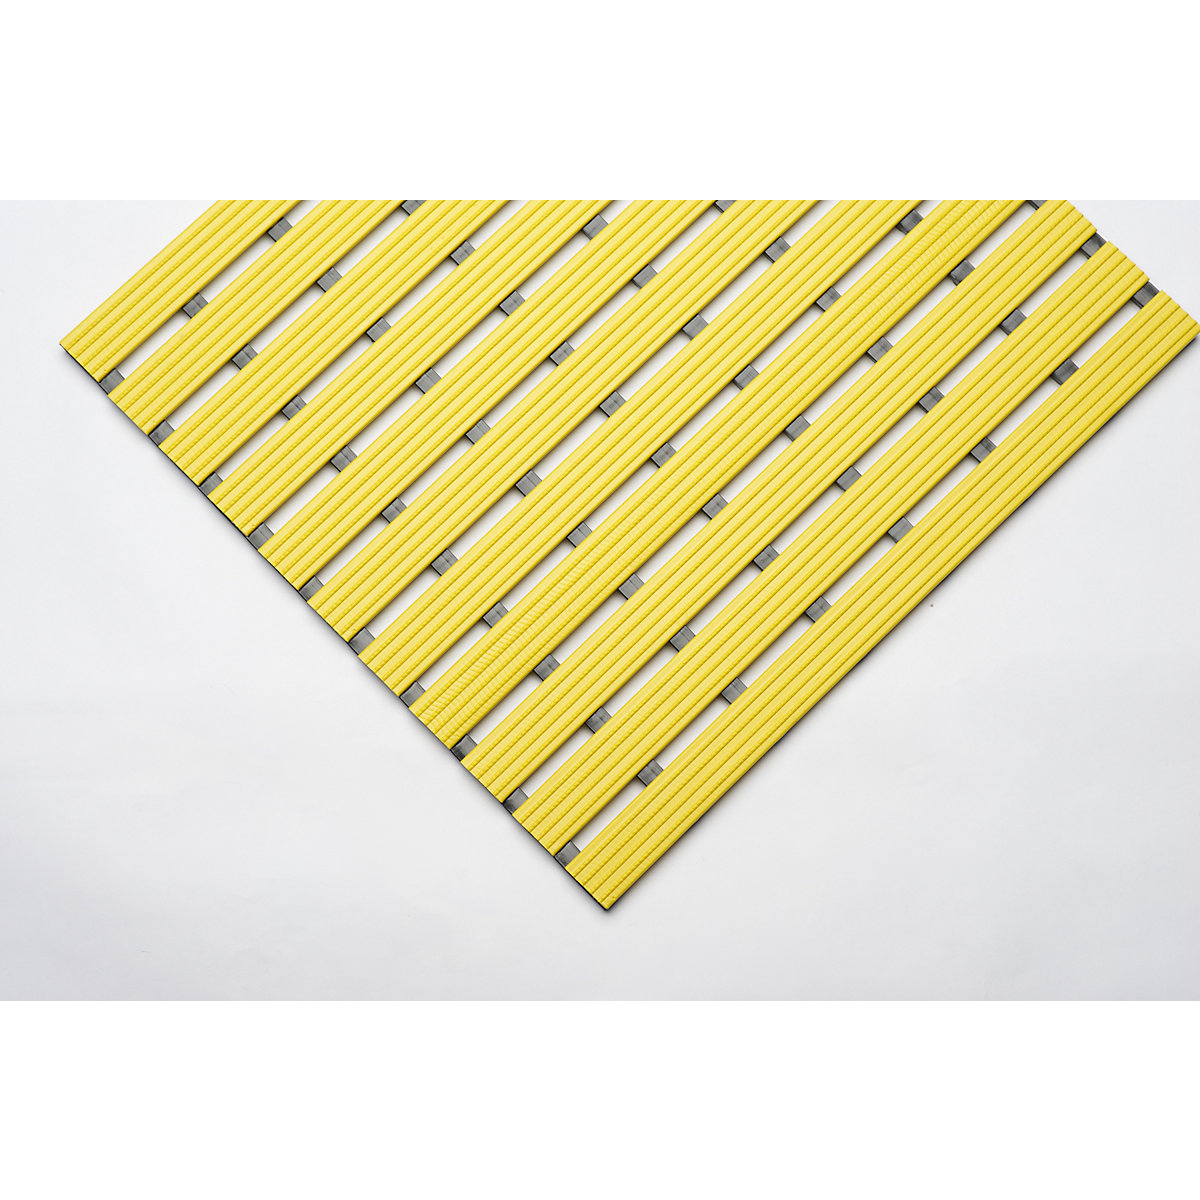 PVC profilová rohožka, na bežný m, pojazdná plocha z tvrdého PVC, protišmyková, šírka 600 mm, žltá